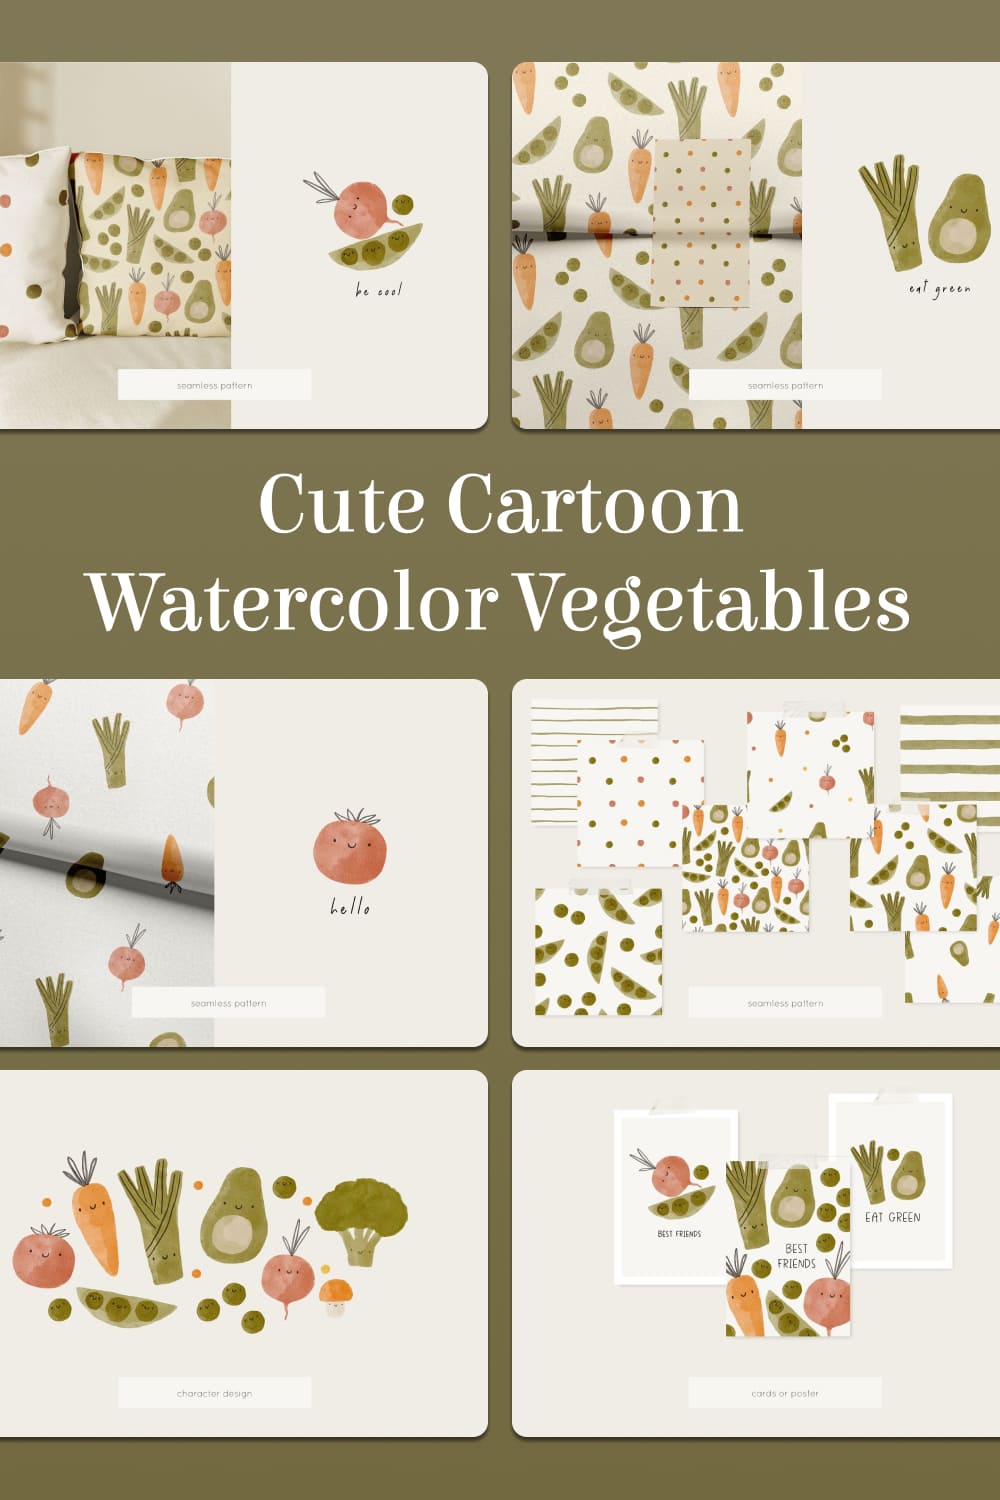 Cute cartoon watercolor vegetables - pinterest image preview.